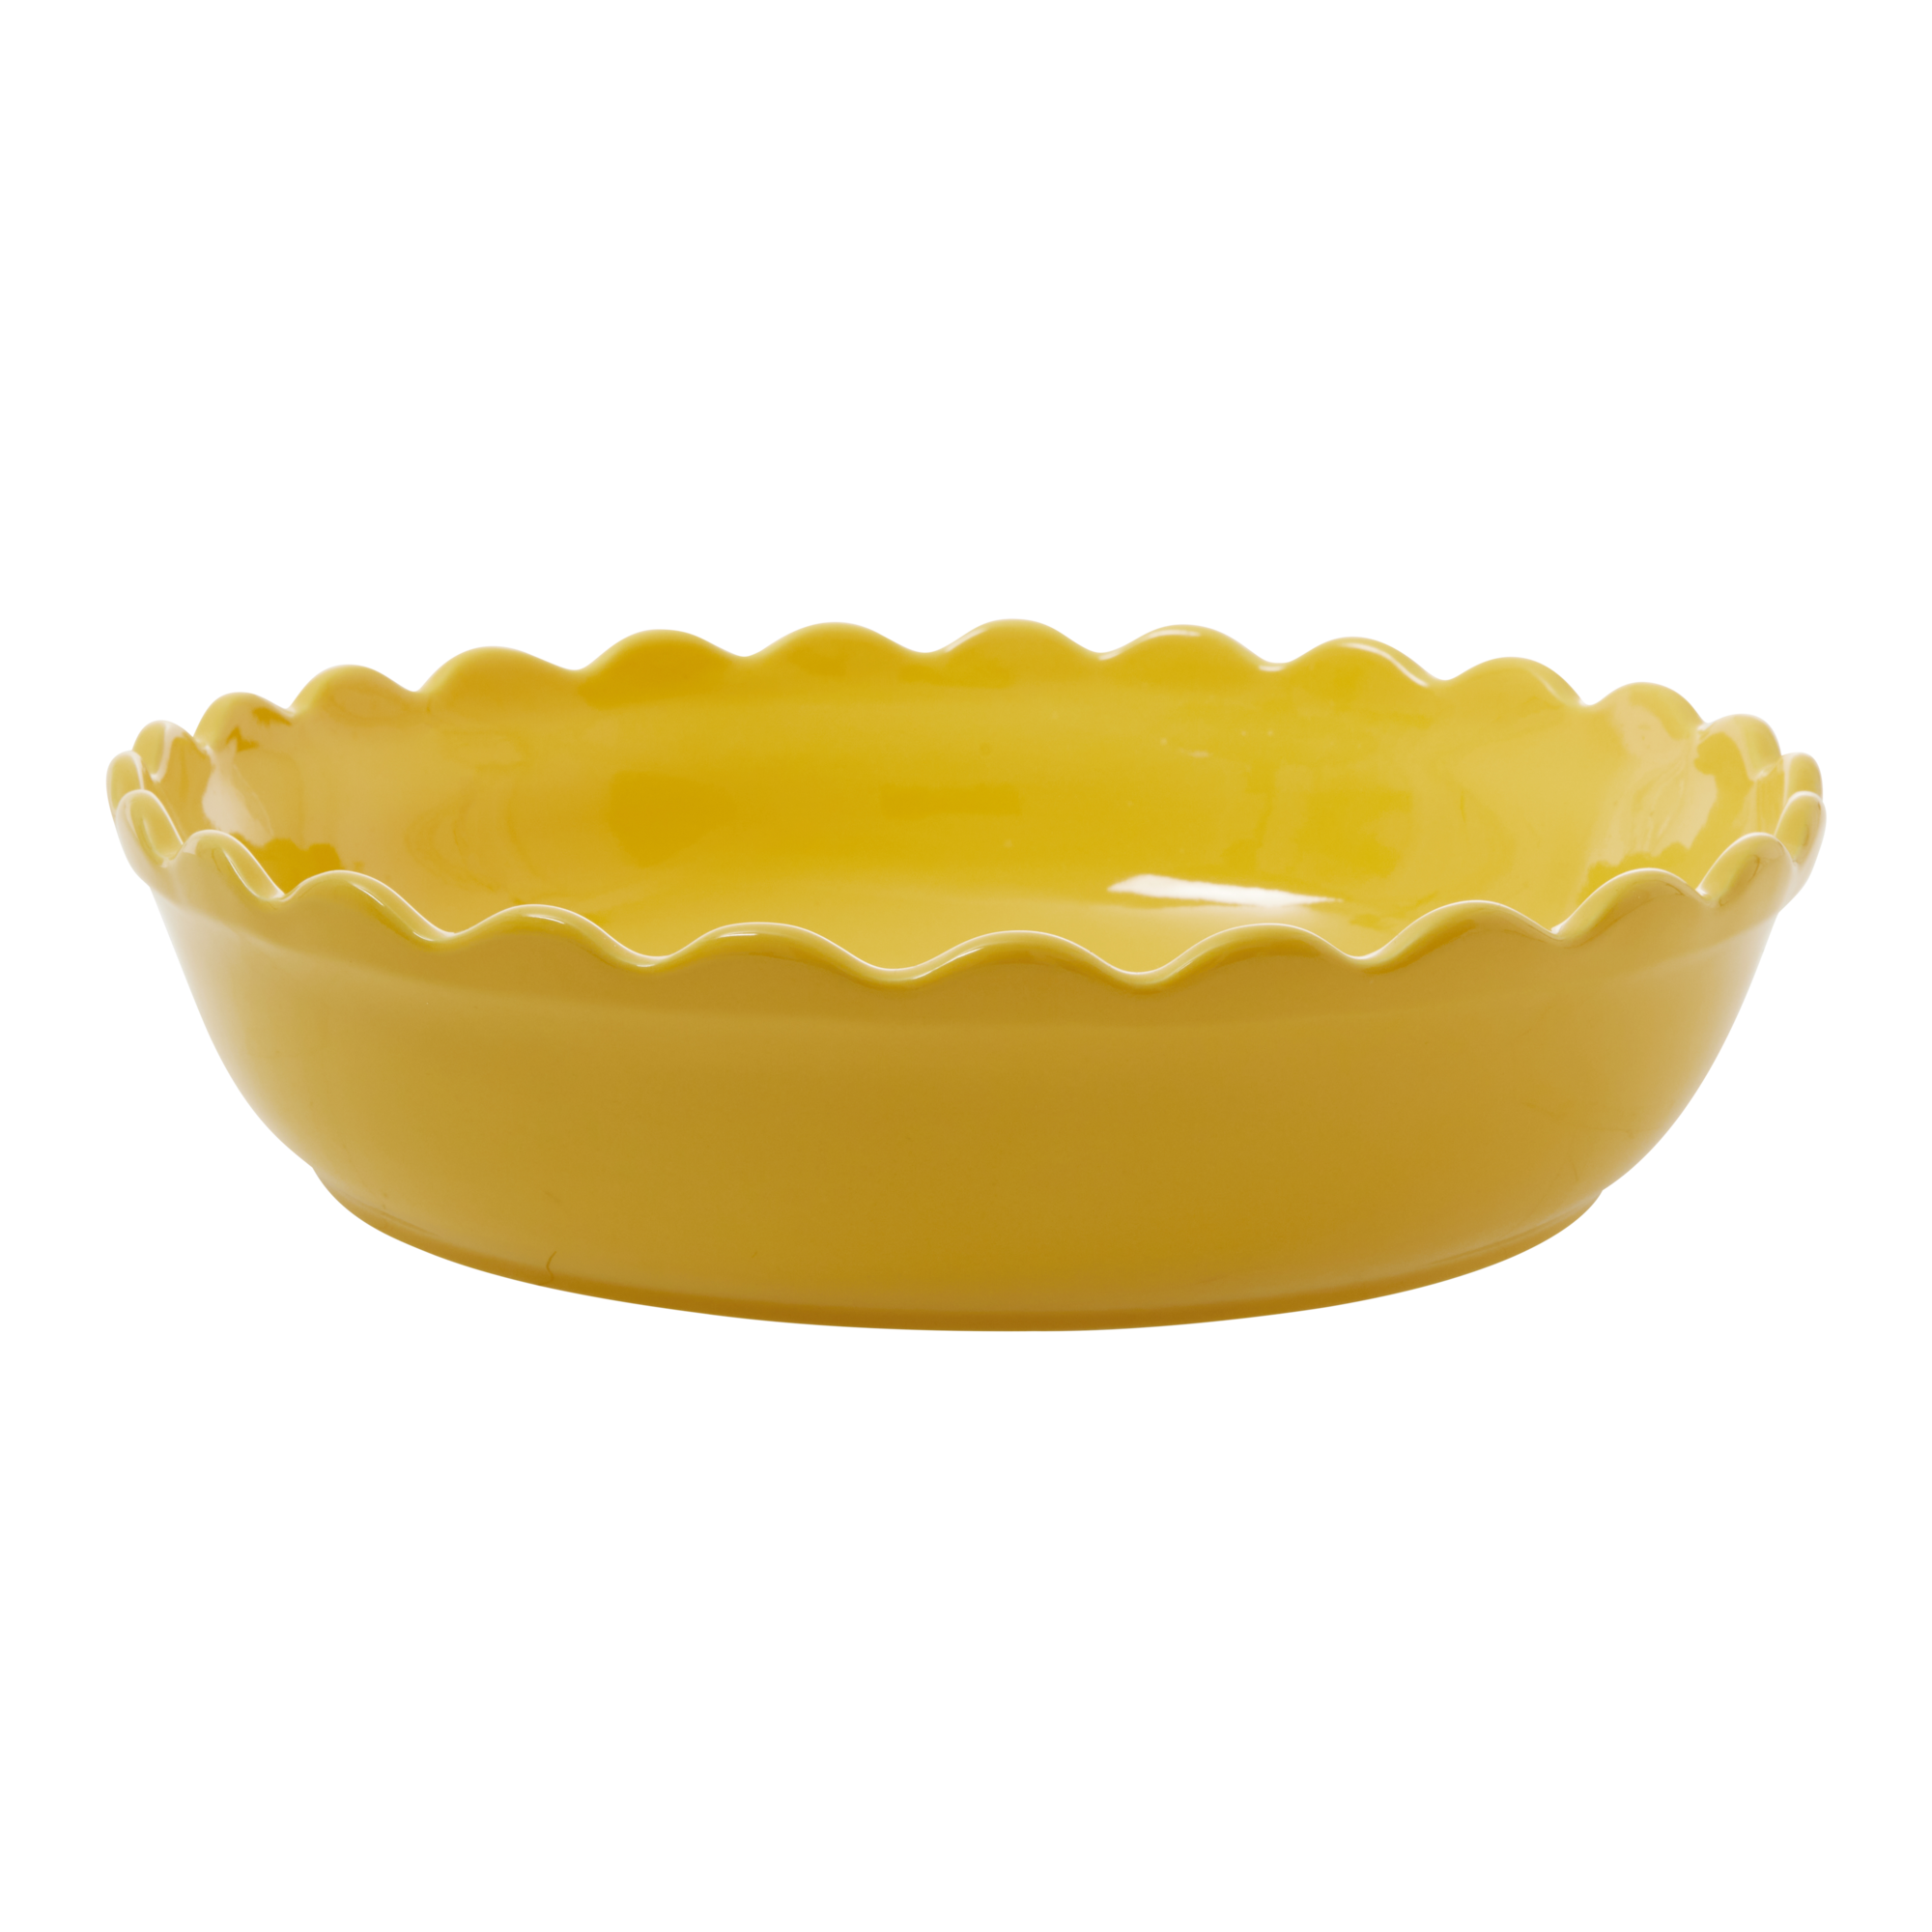 Rice - Stoneware Pie Dish - Yellow L